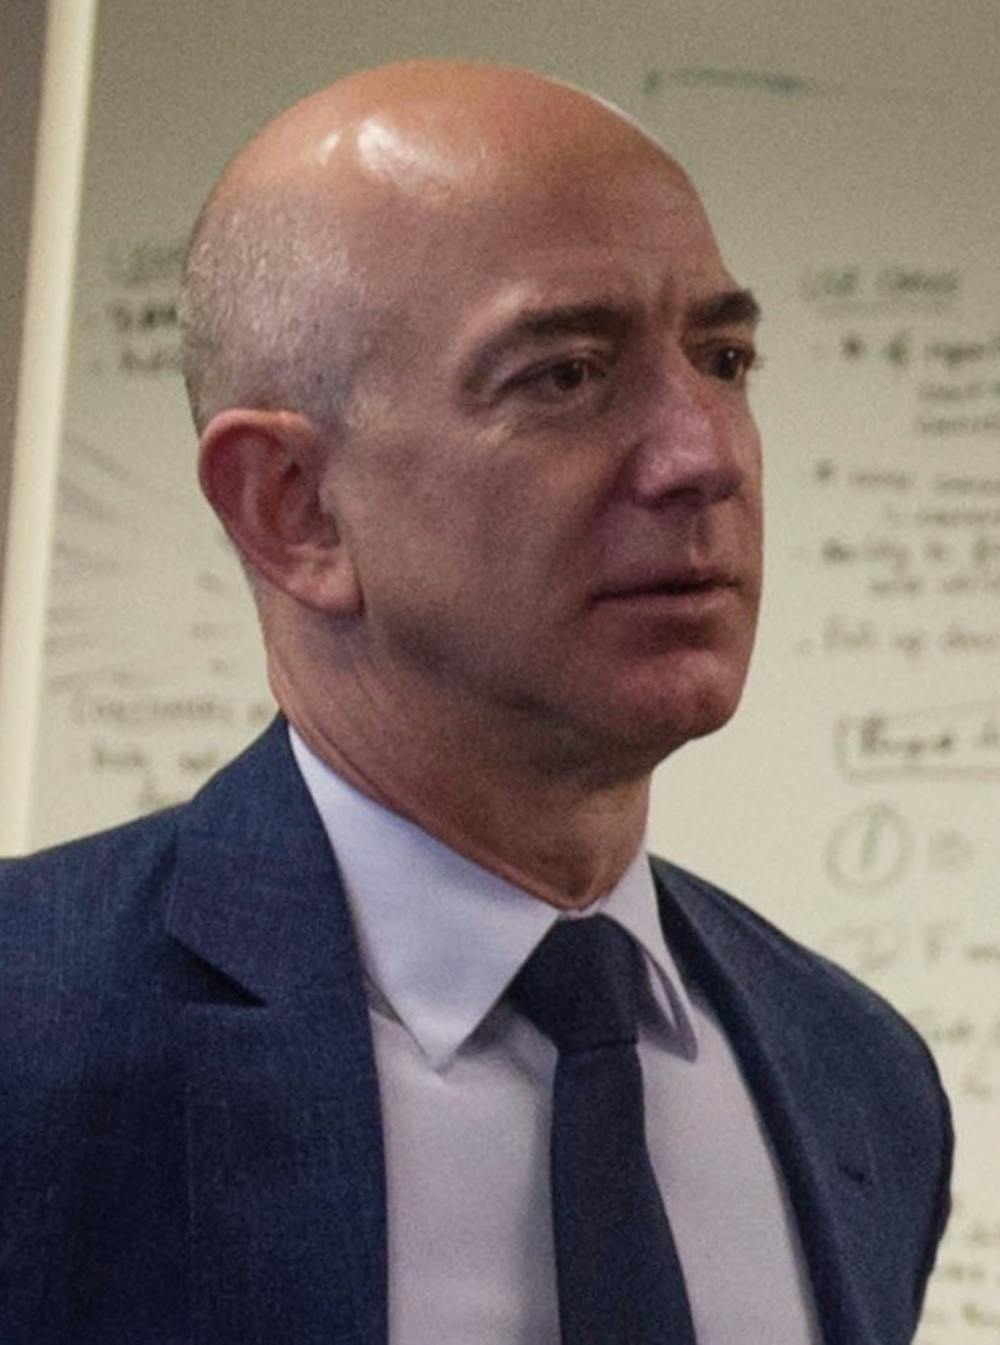 The problem with Jeff Bezos's philanthropy - The Princetonian